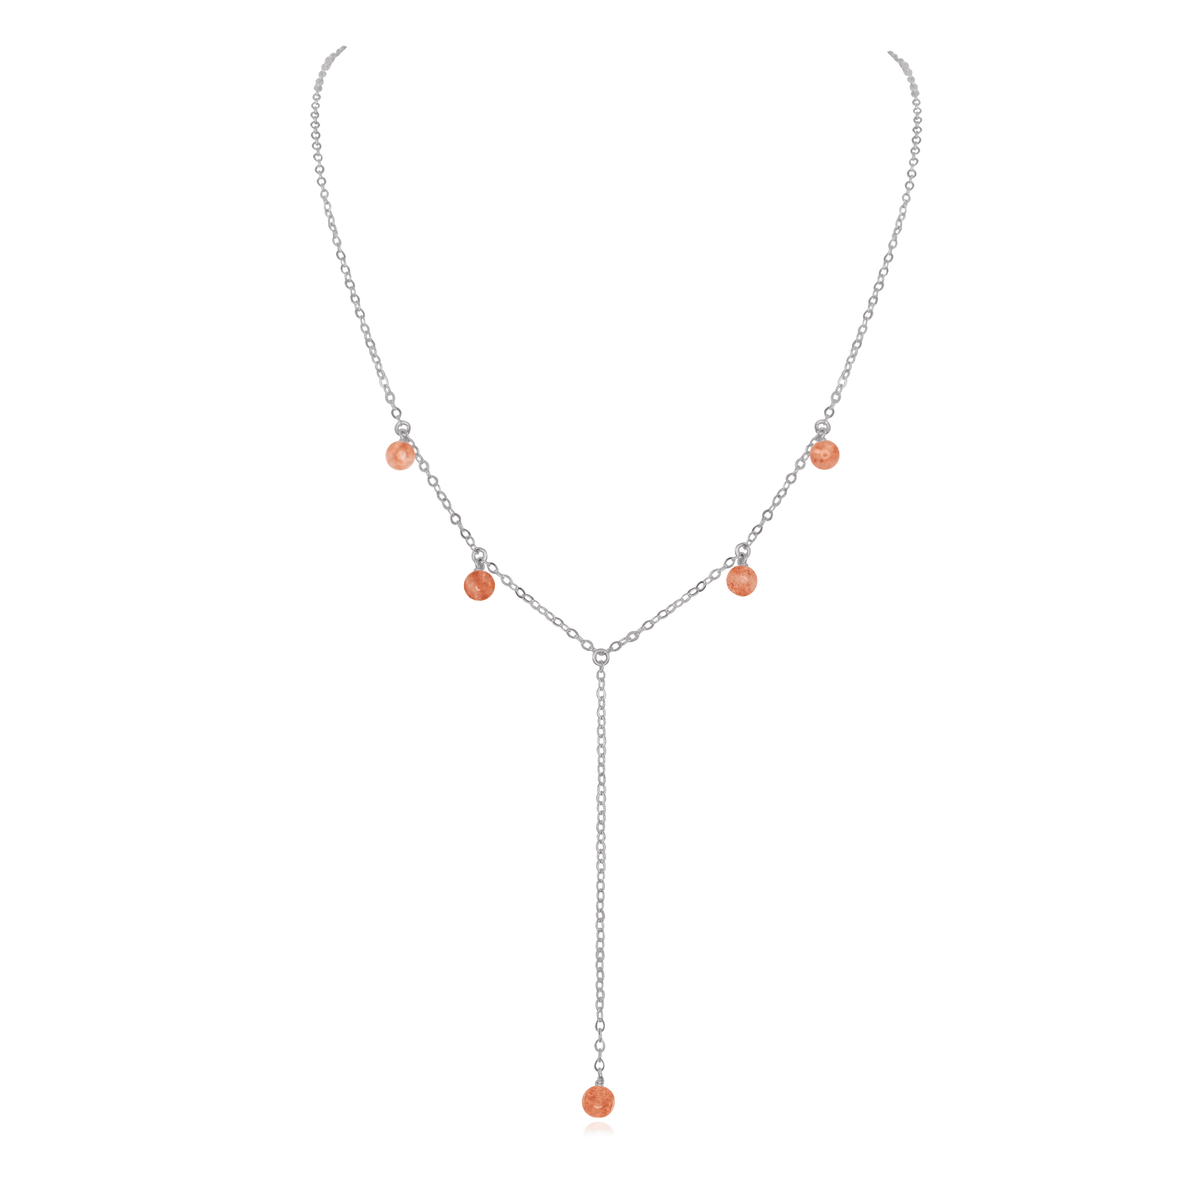 Sunstone Boho Lariat Necklace - Sunstone Boho Lariat Necklace - Stainless Steel - Luna Tide Handmade Crystal Jewellery